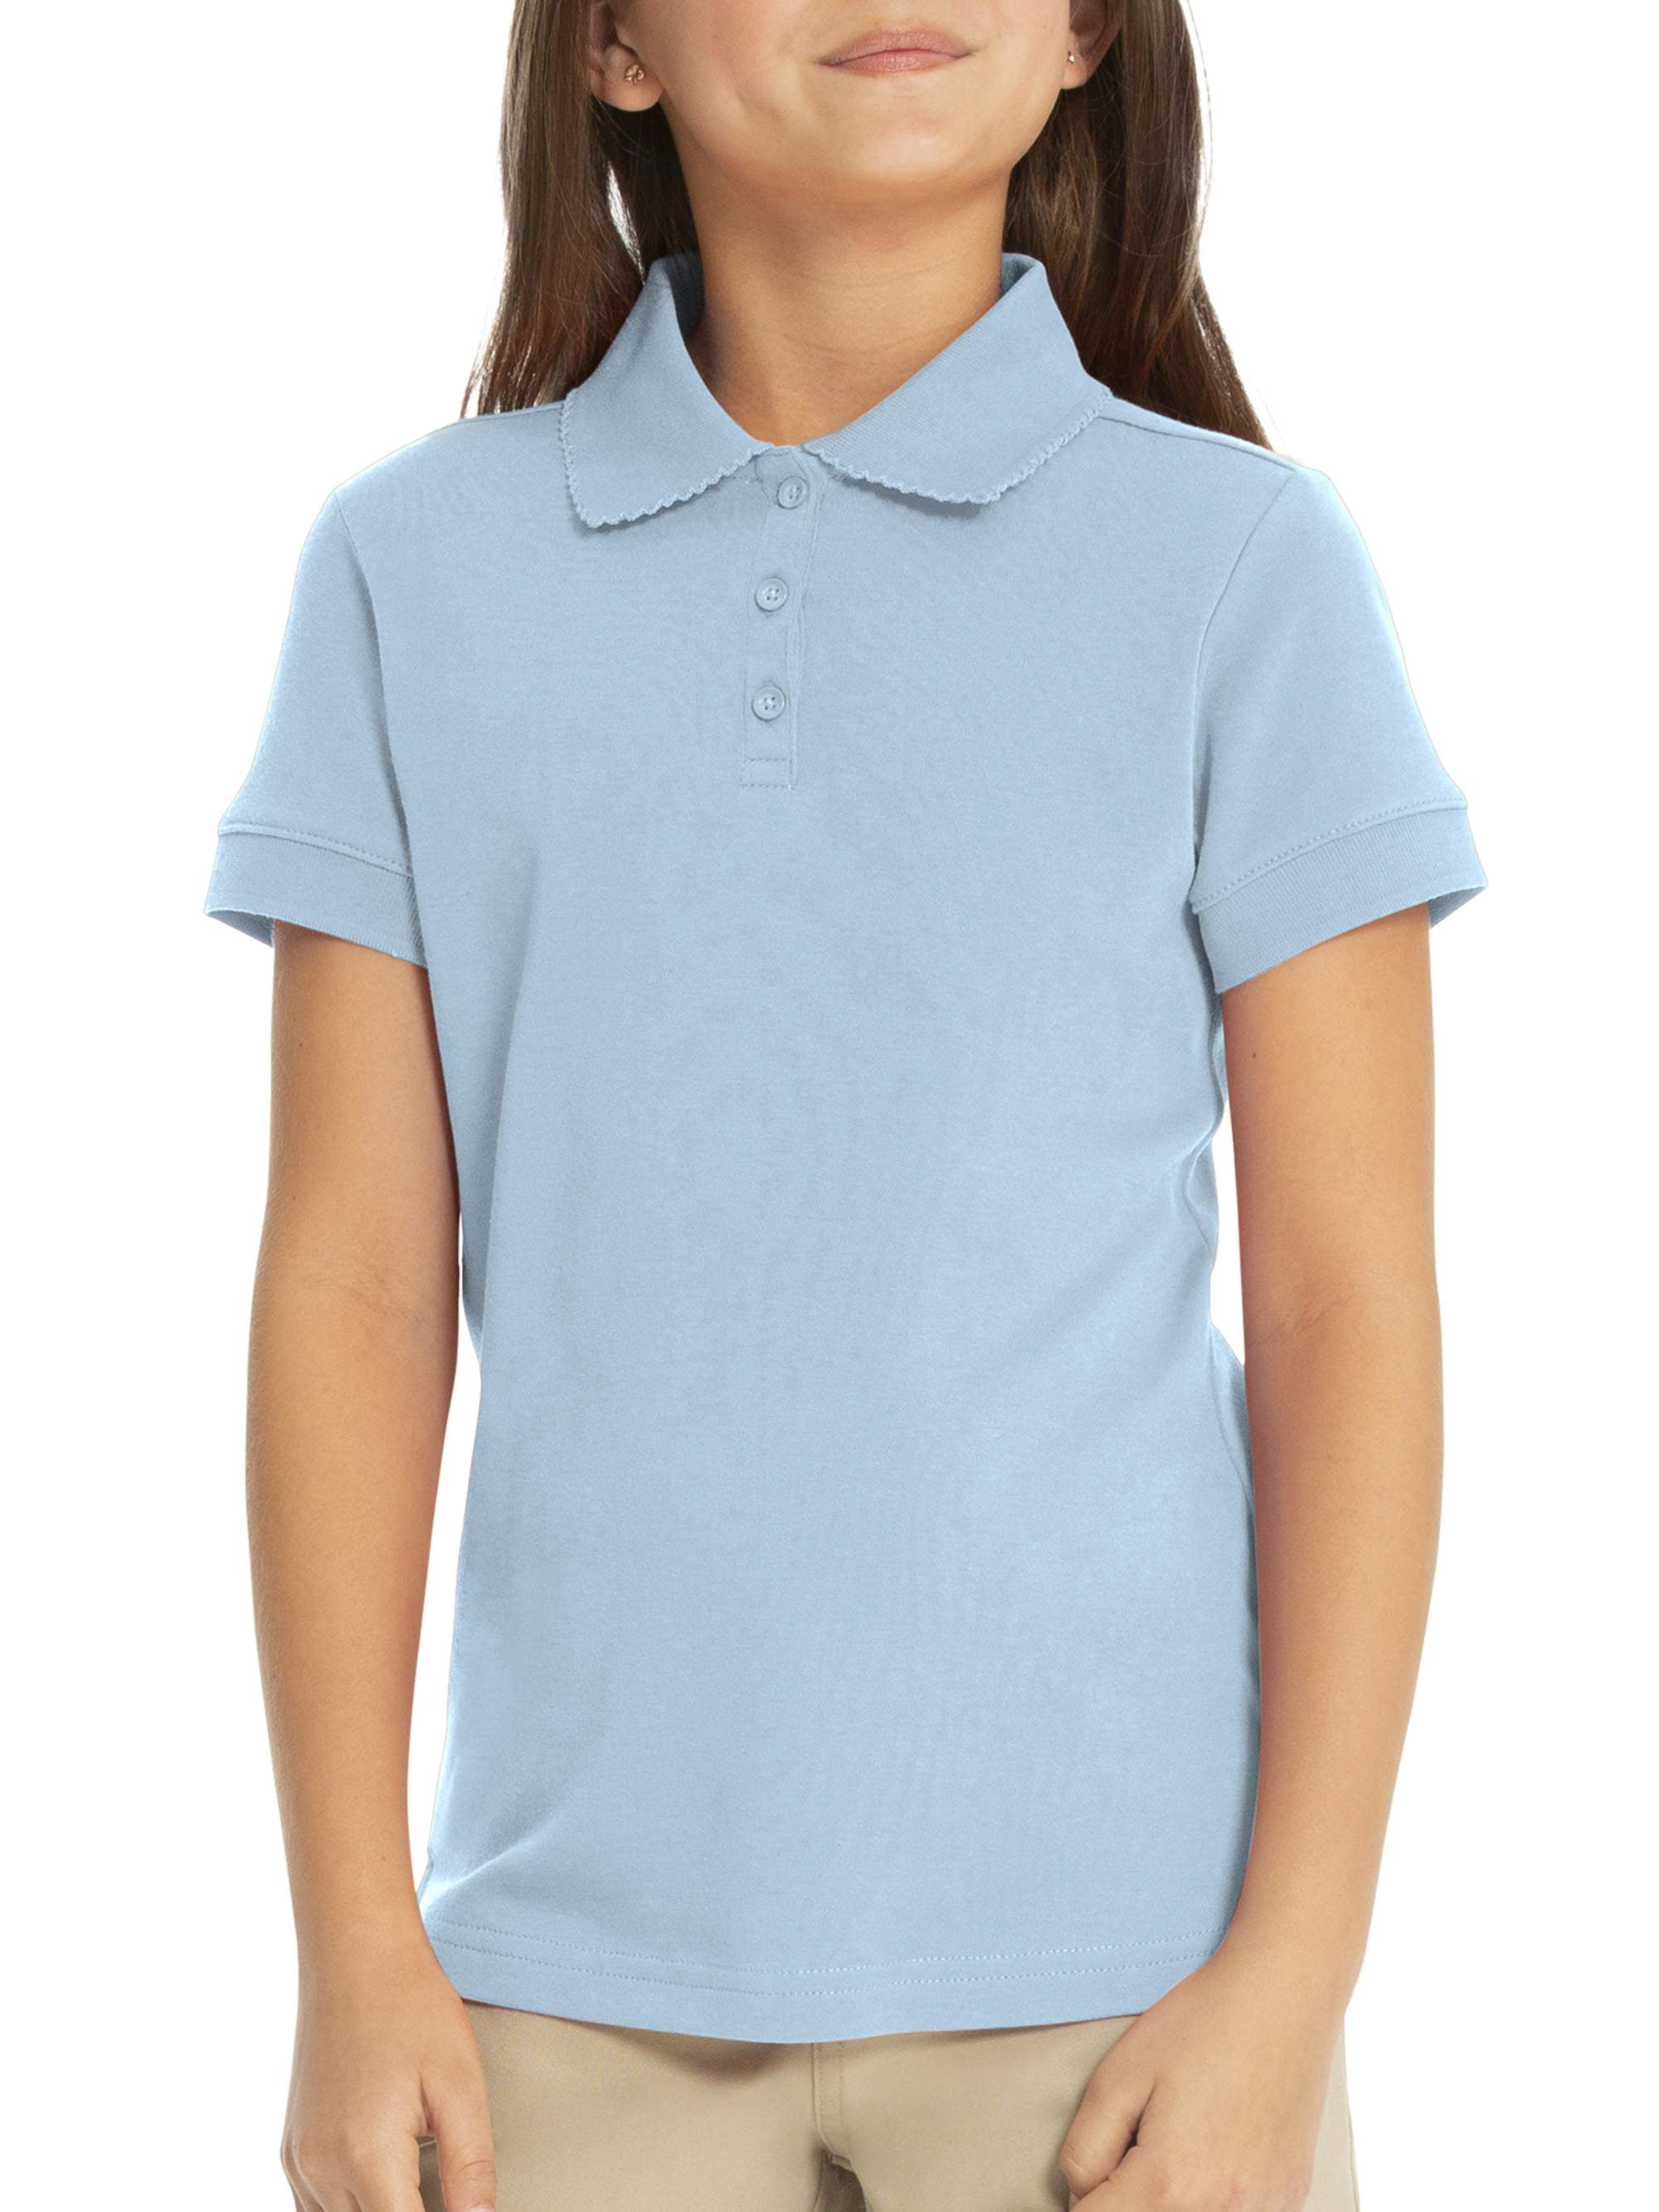 Womens Solid Basic Short Sleeve School Uniform Polo Top